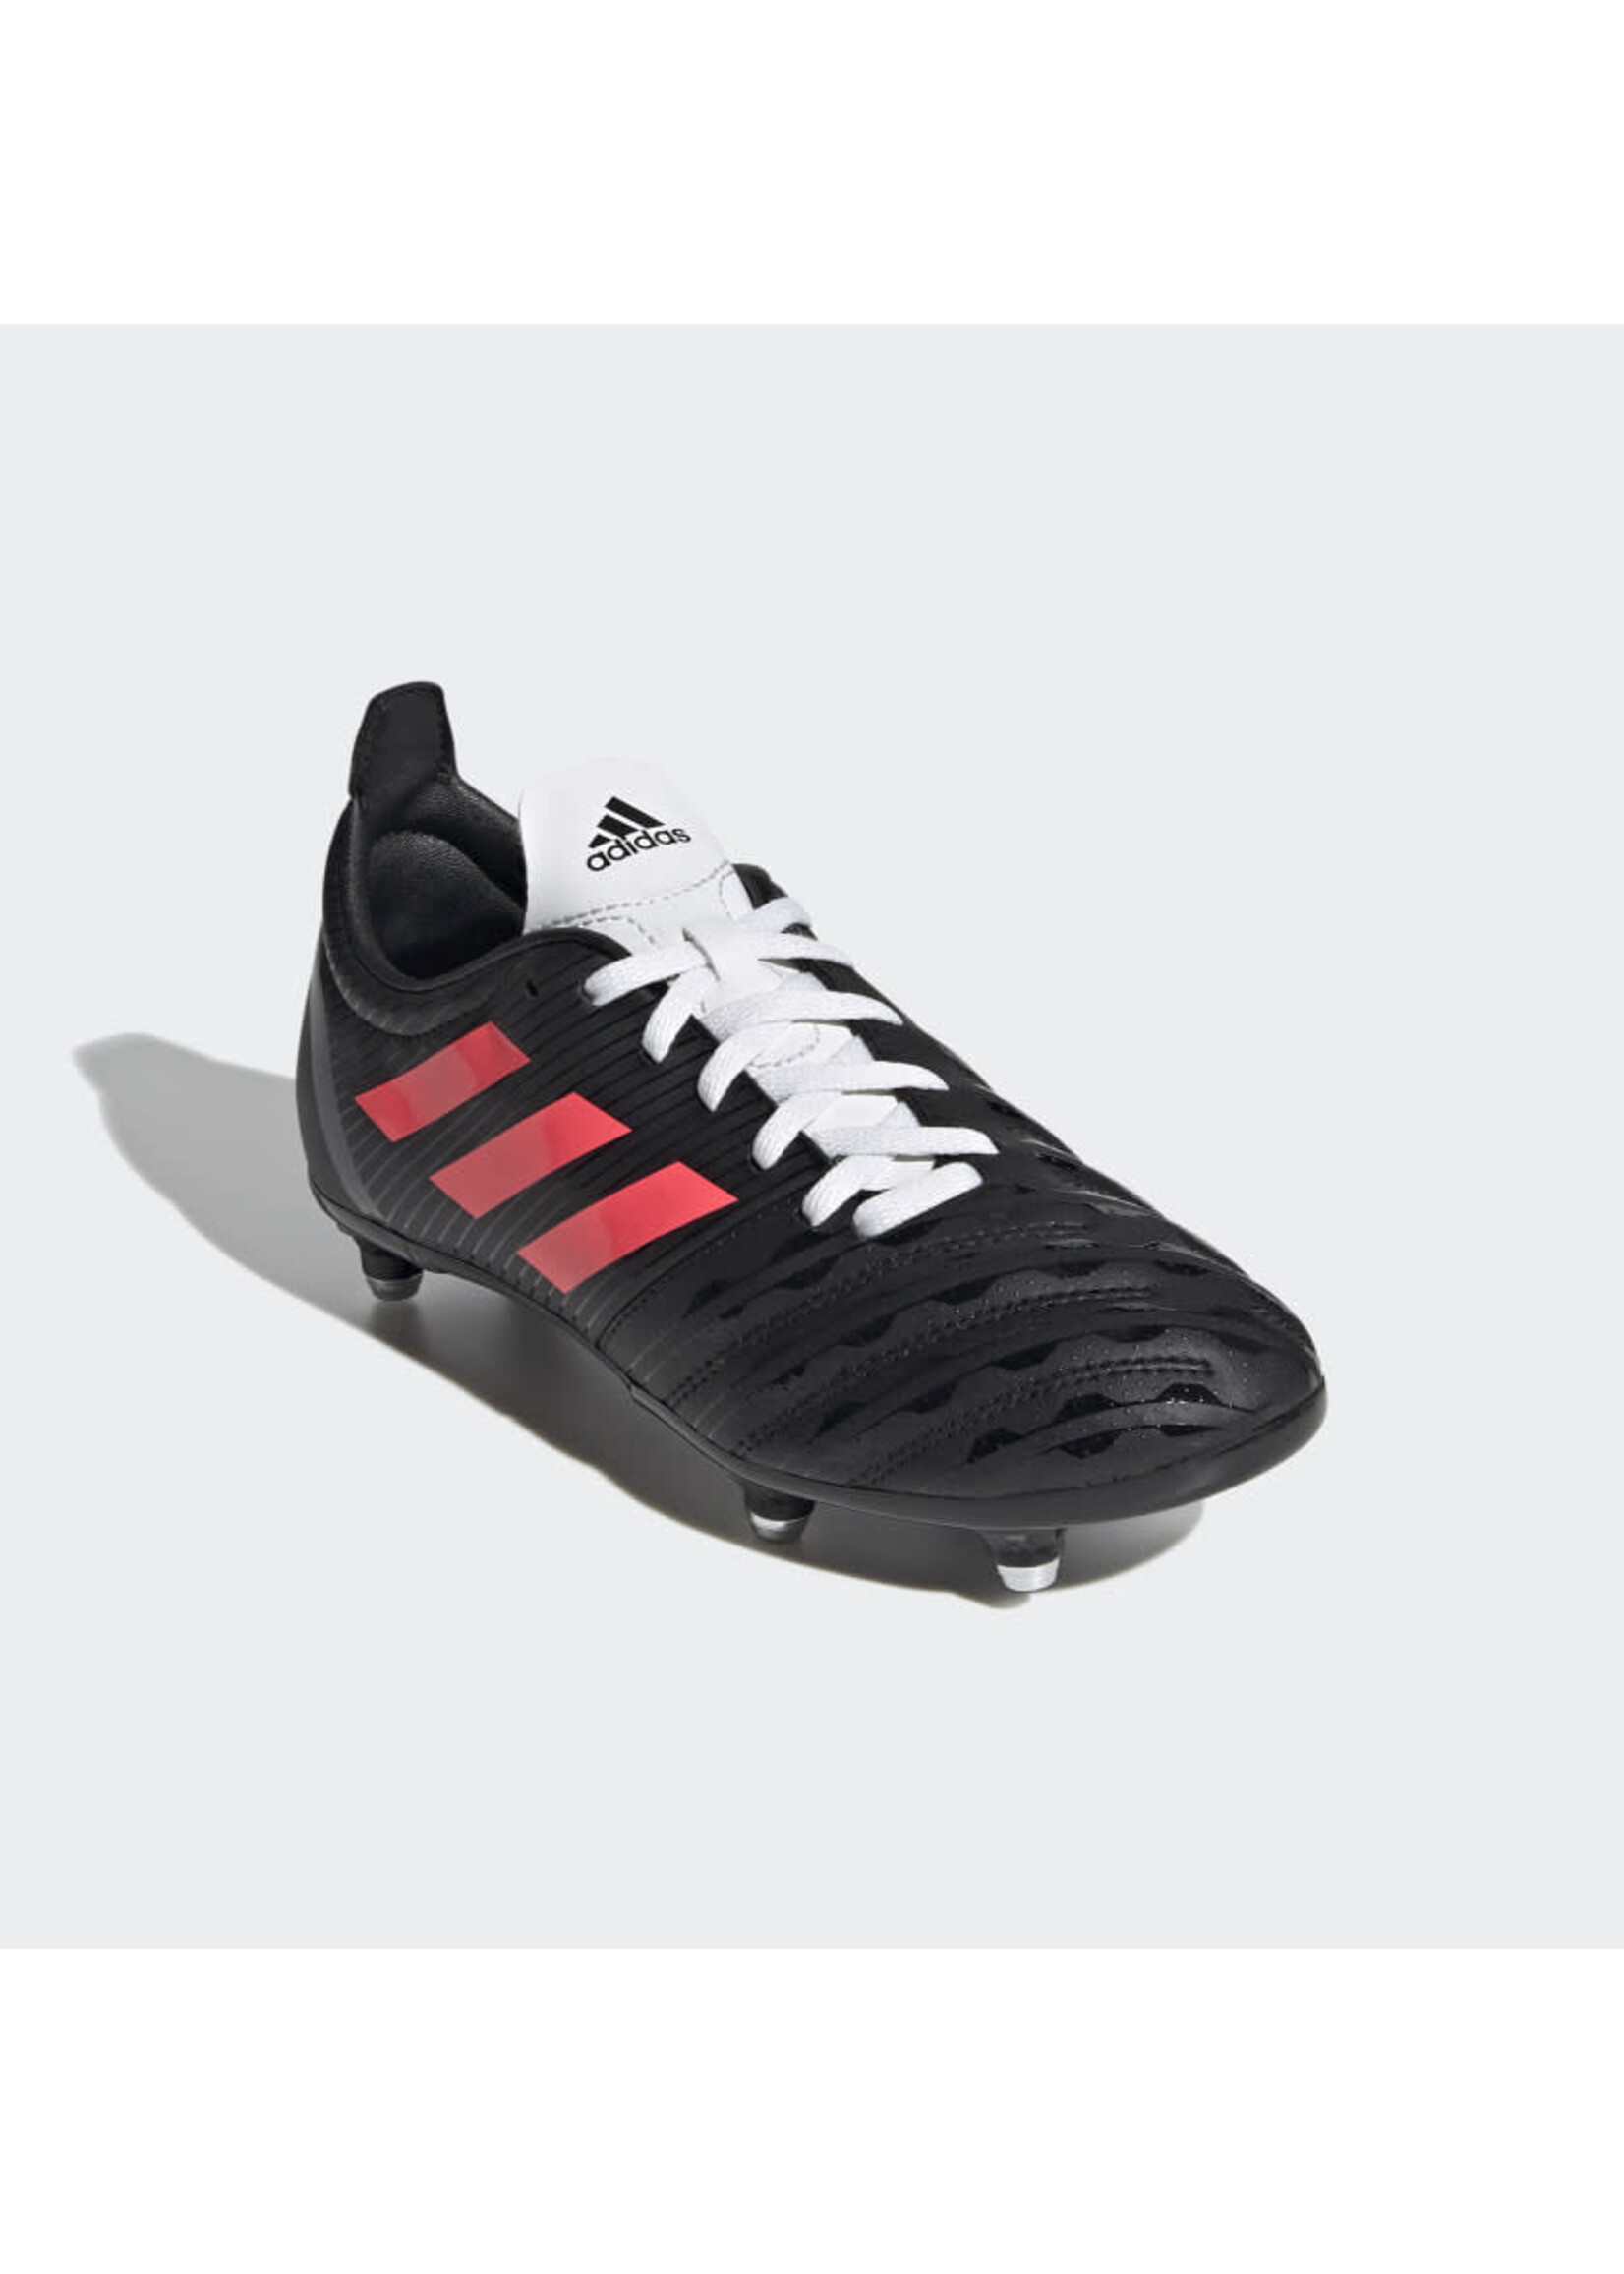 Adidas Adidas Malice Junior Rugby Boots - SG (2021)